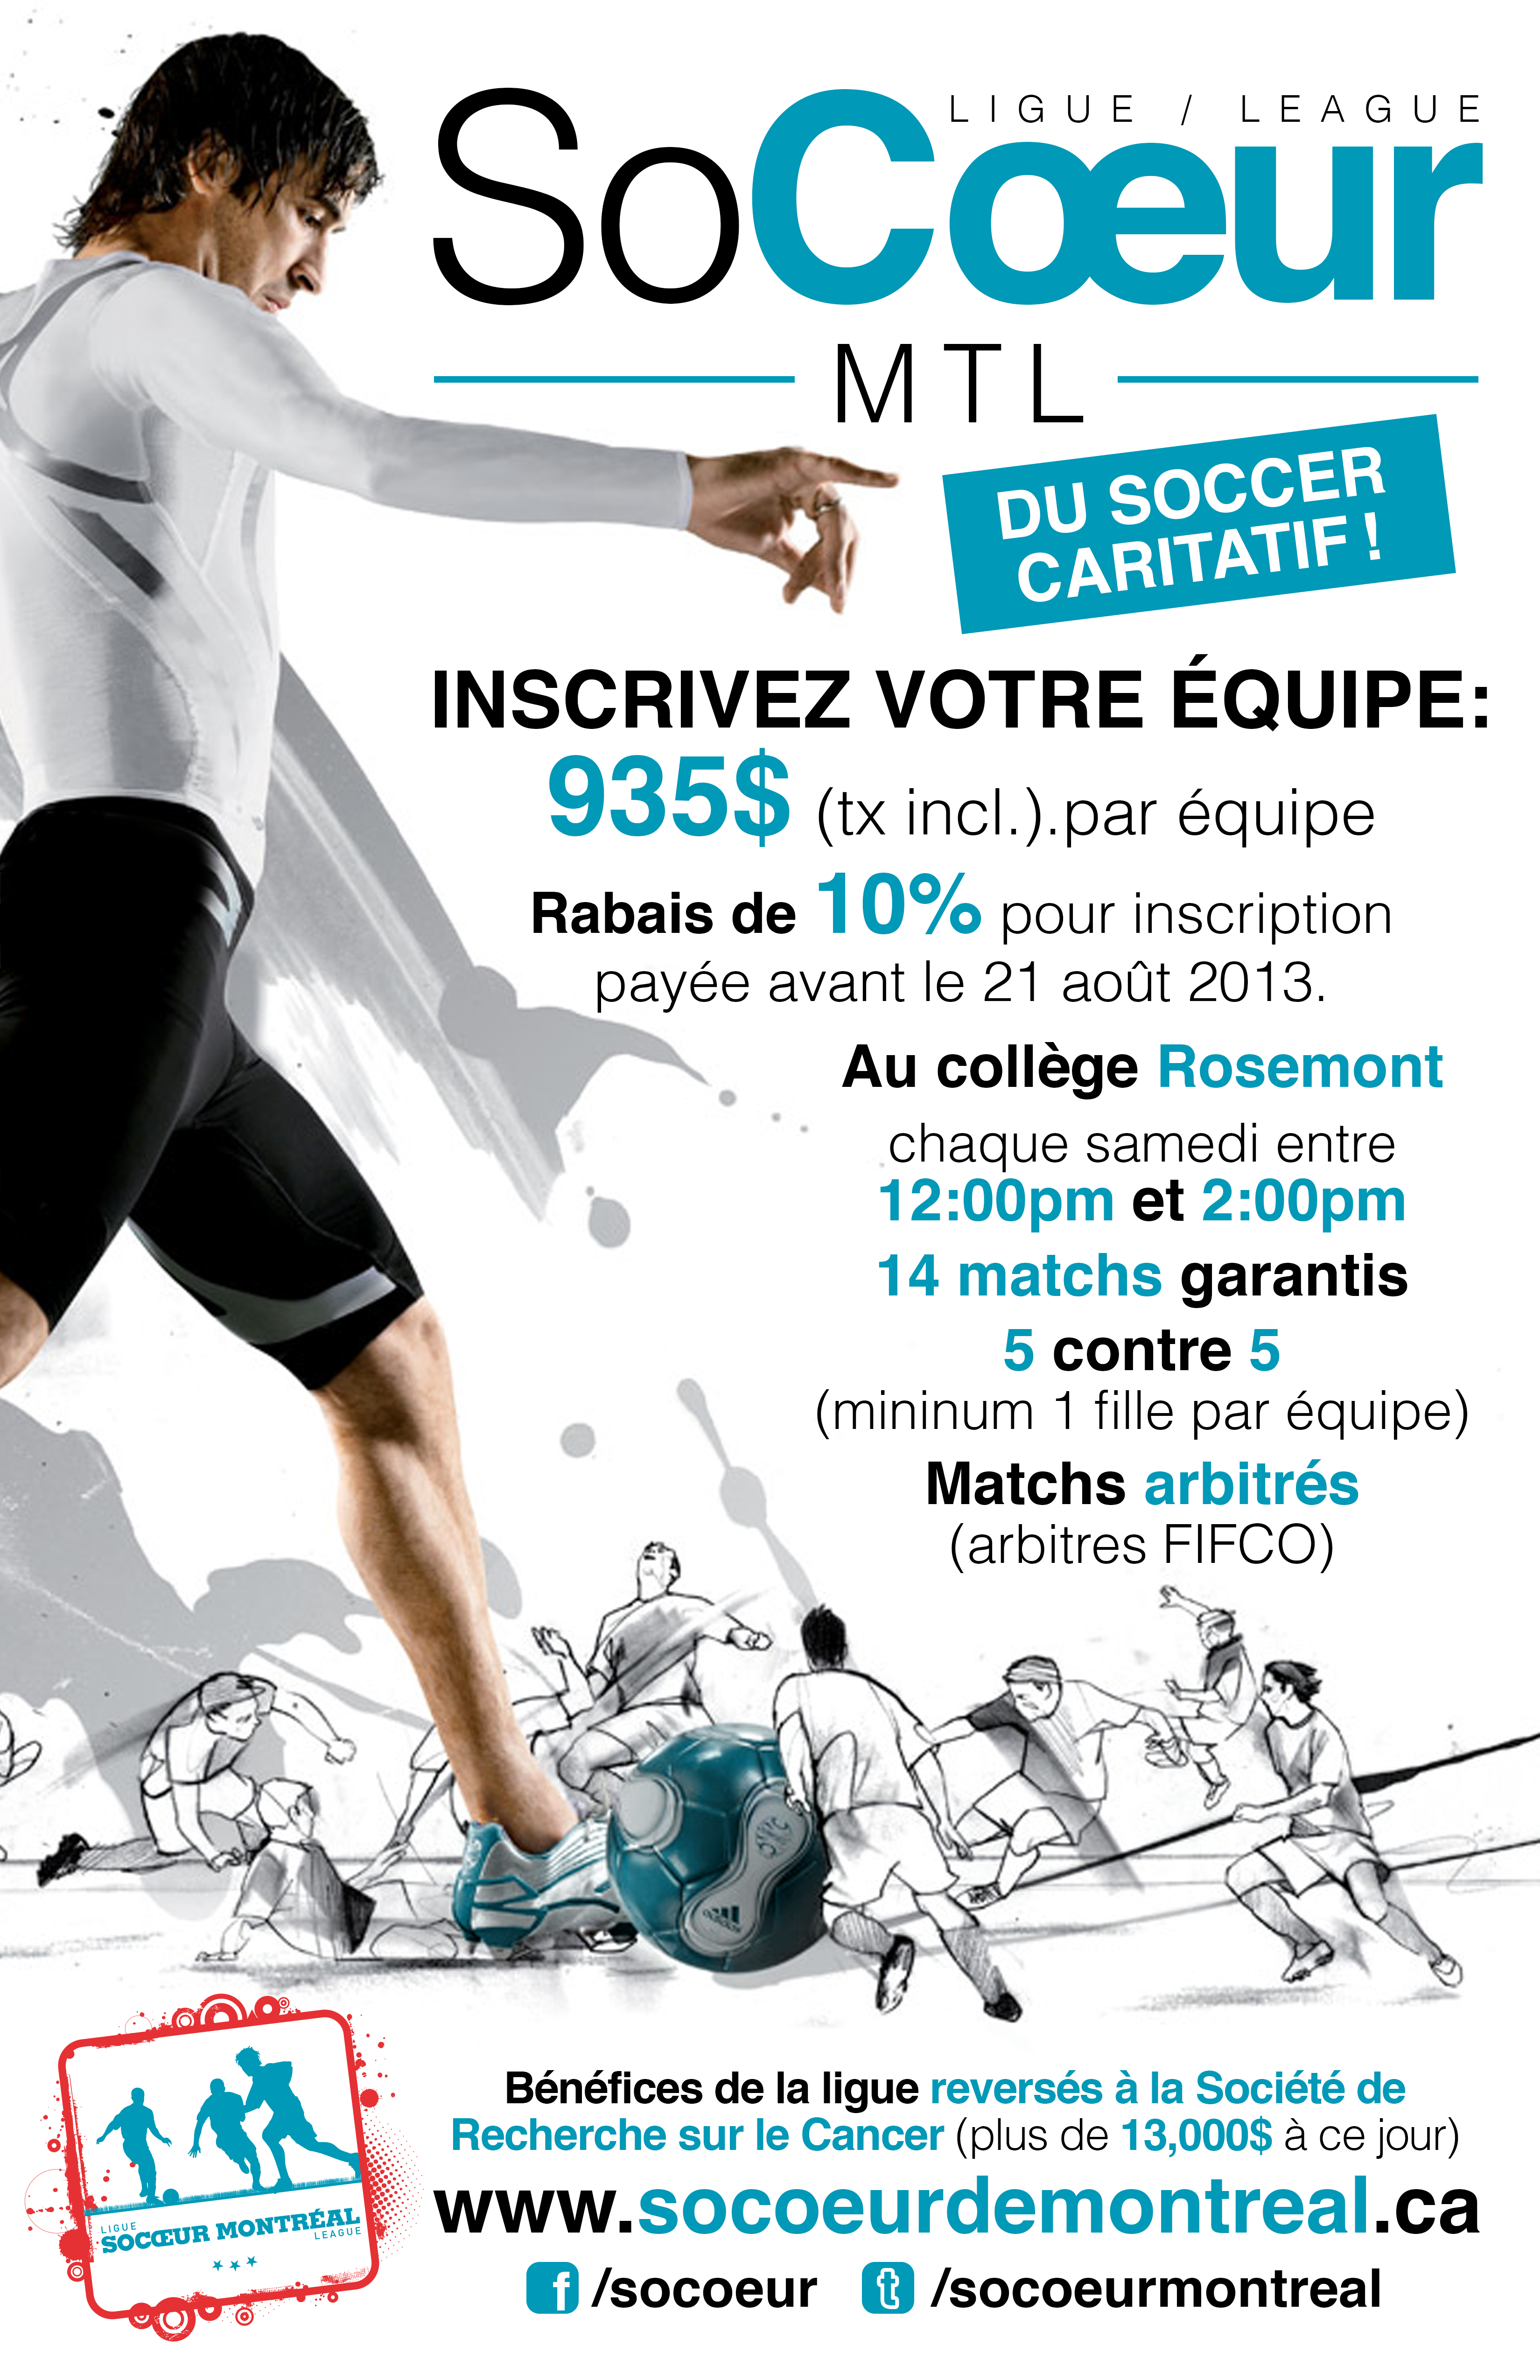 Affiche Ligue SoCoeur Montreal Automne 2013 11x17